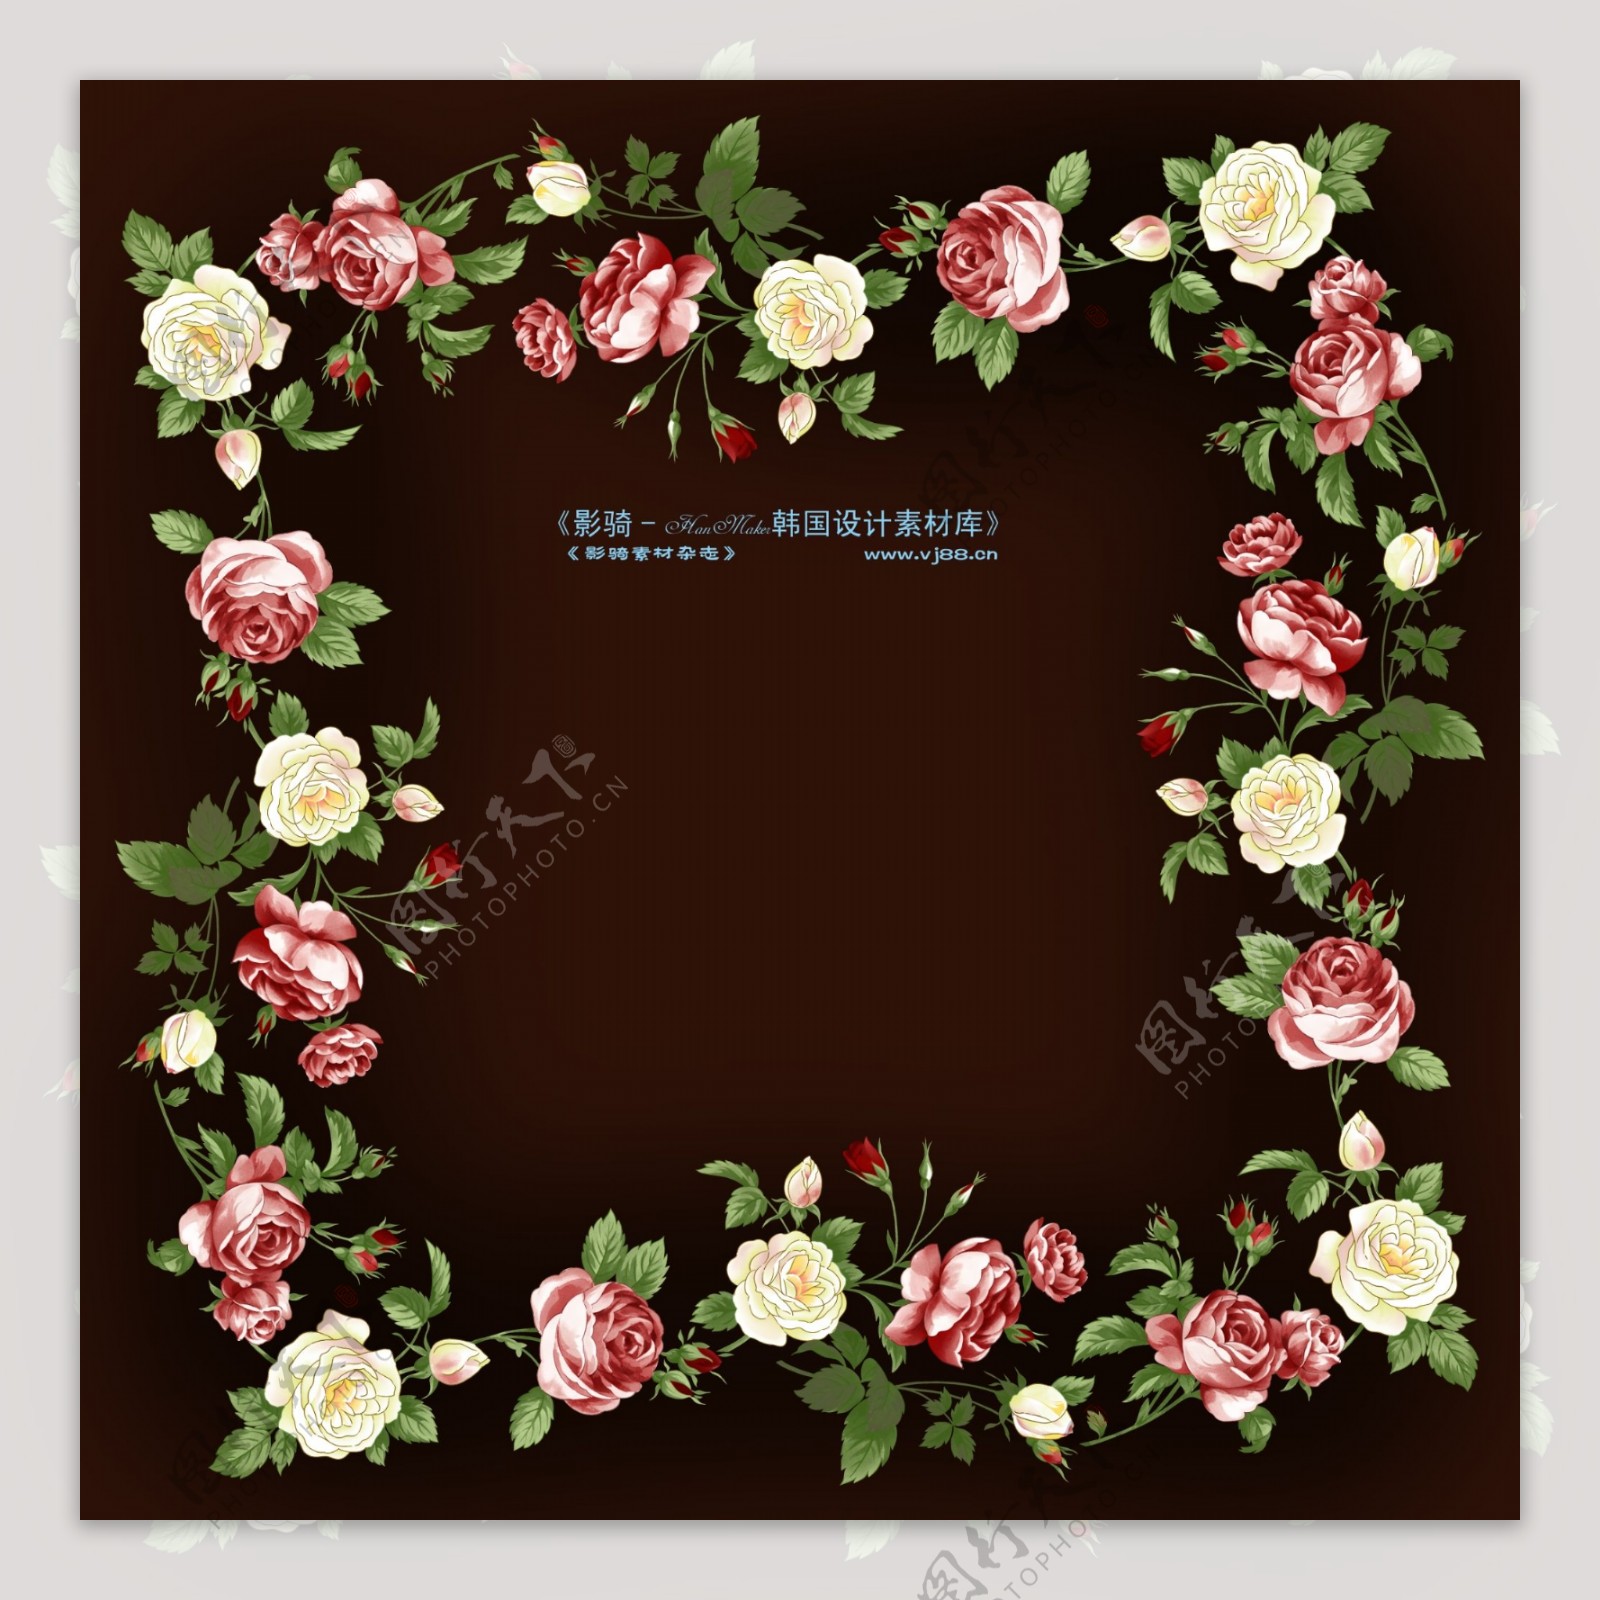 HanMaker韩国设计素材库背景底纹花纹边框相框图案